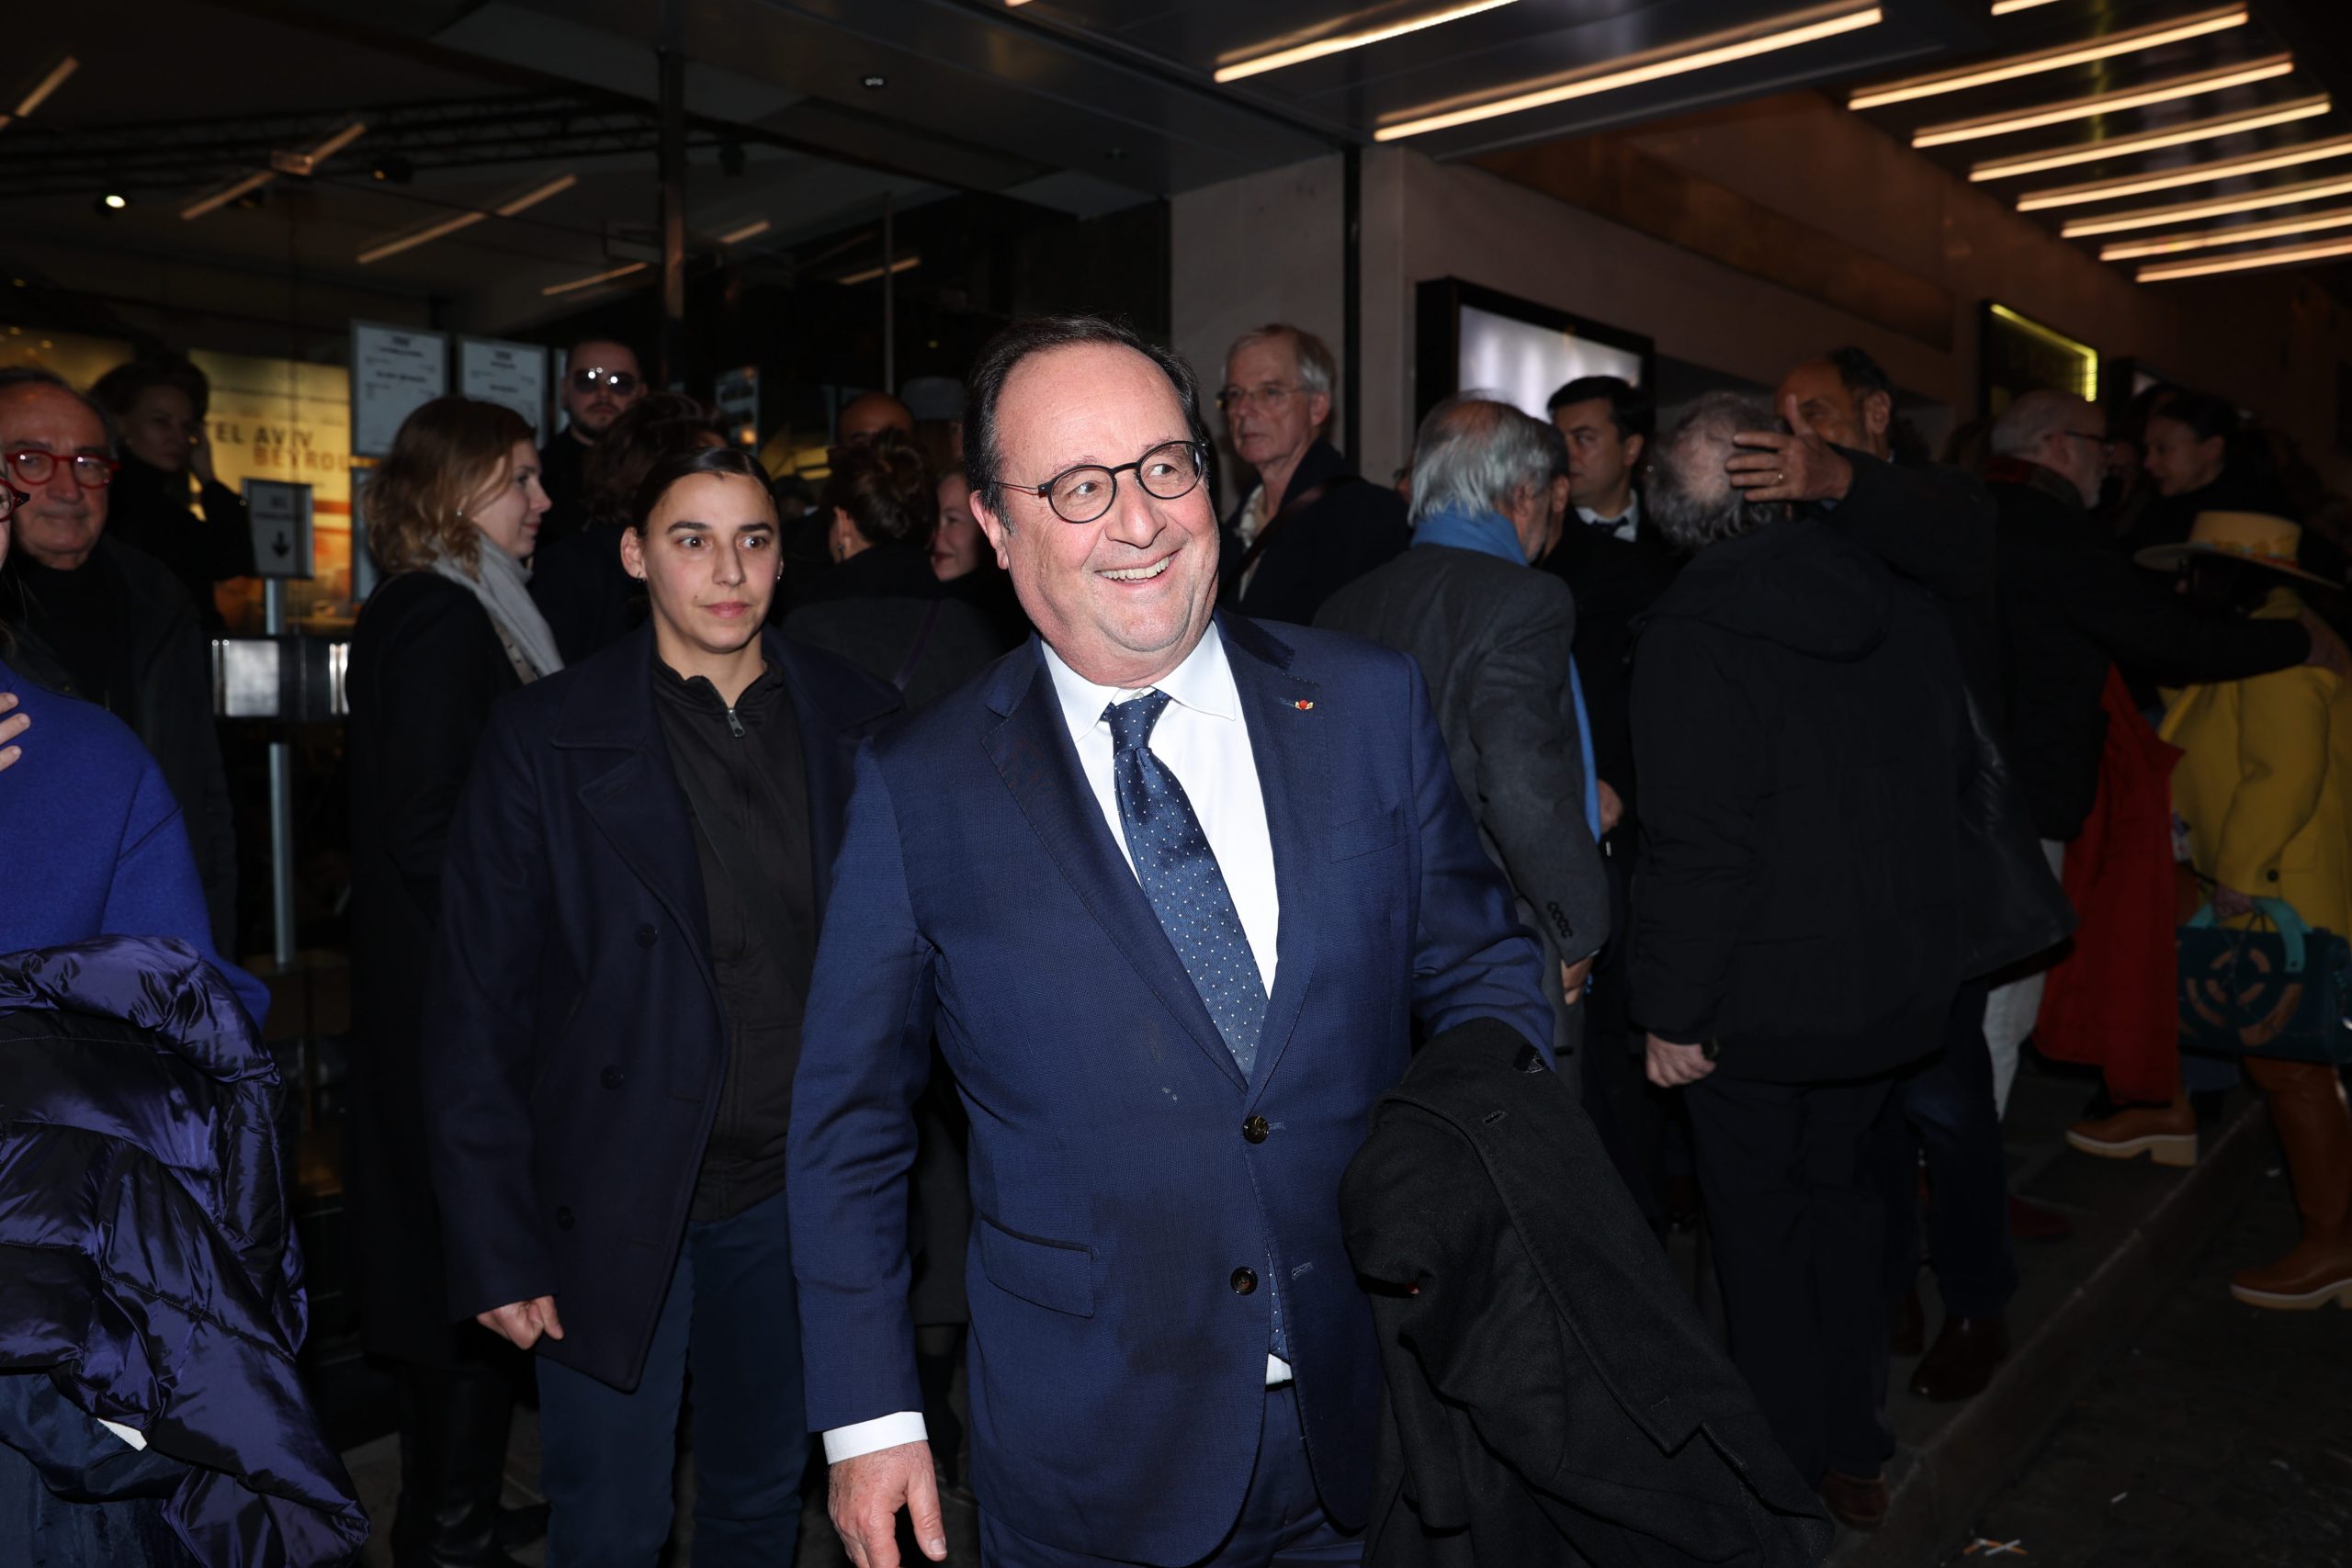 François Hollande at the preview of BHL's film "Slava Ukraini" on 6 February 2023 at the Balzac. Photo: Igor Shabalin